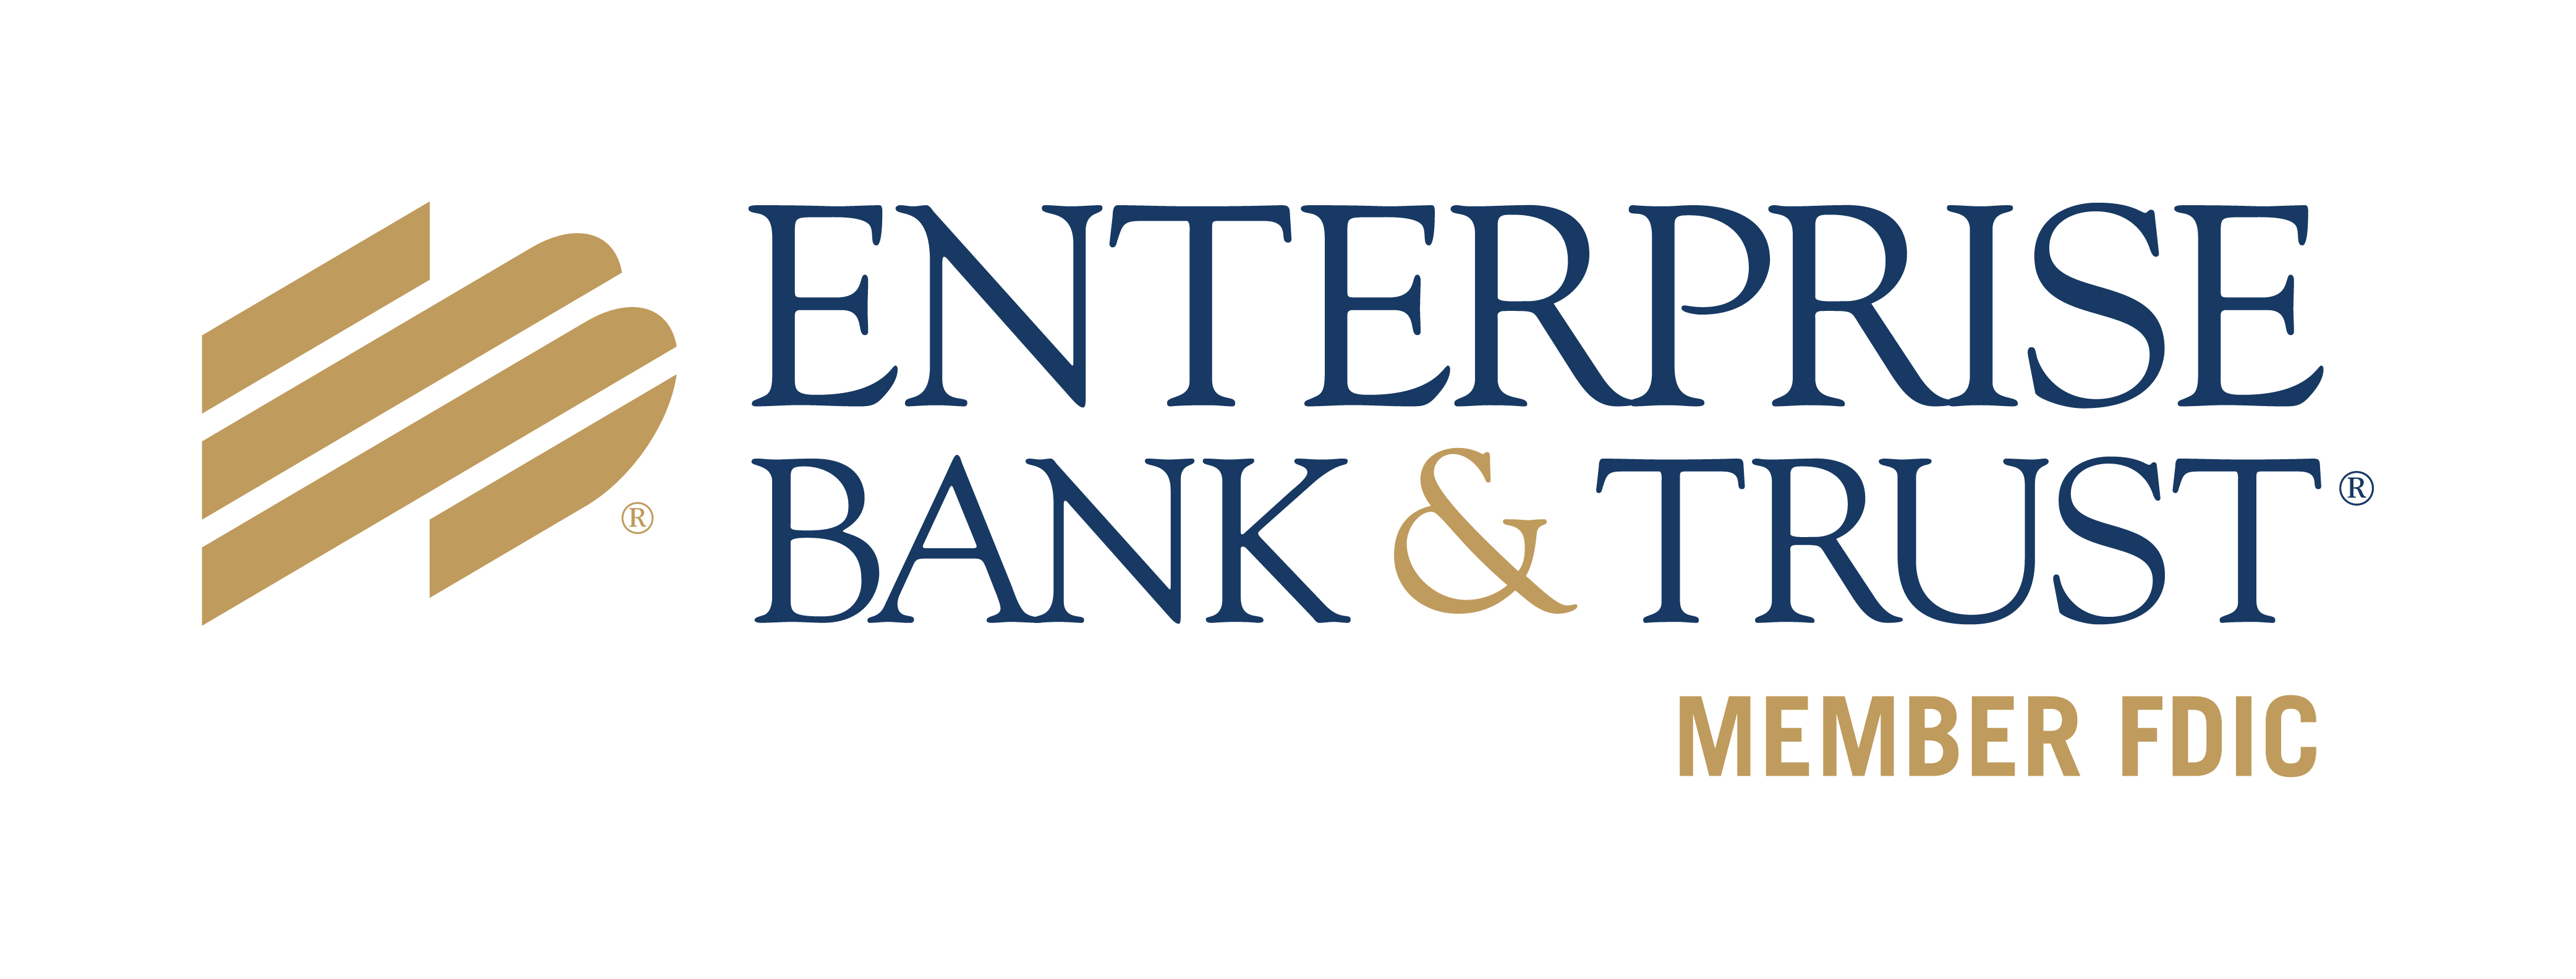 Enterprise Bank & Trust - Downtown Office